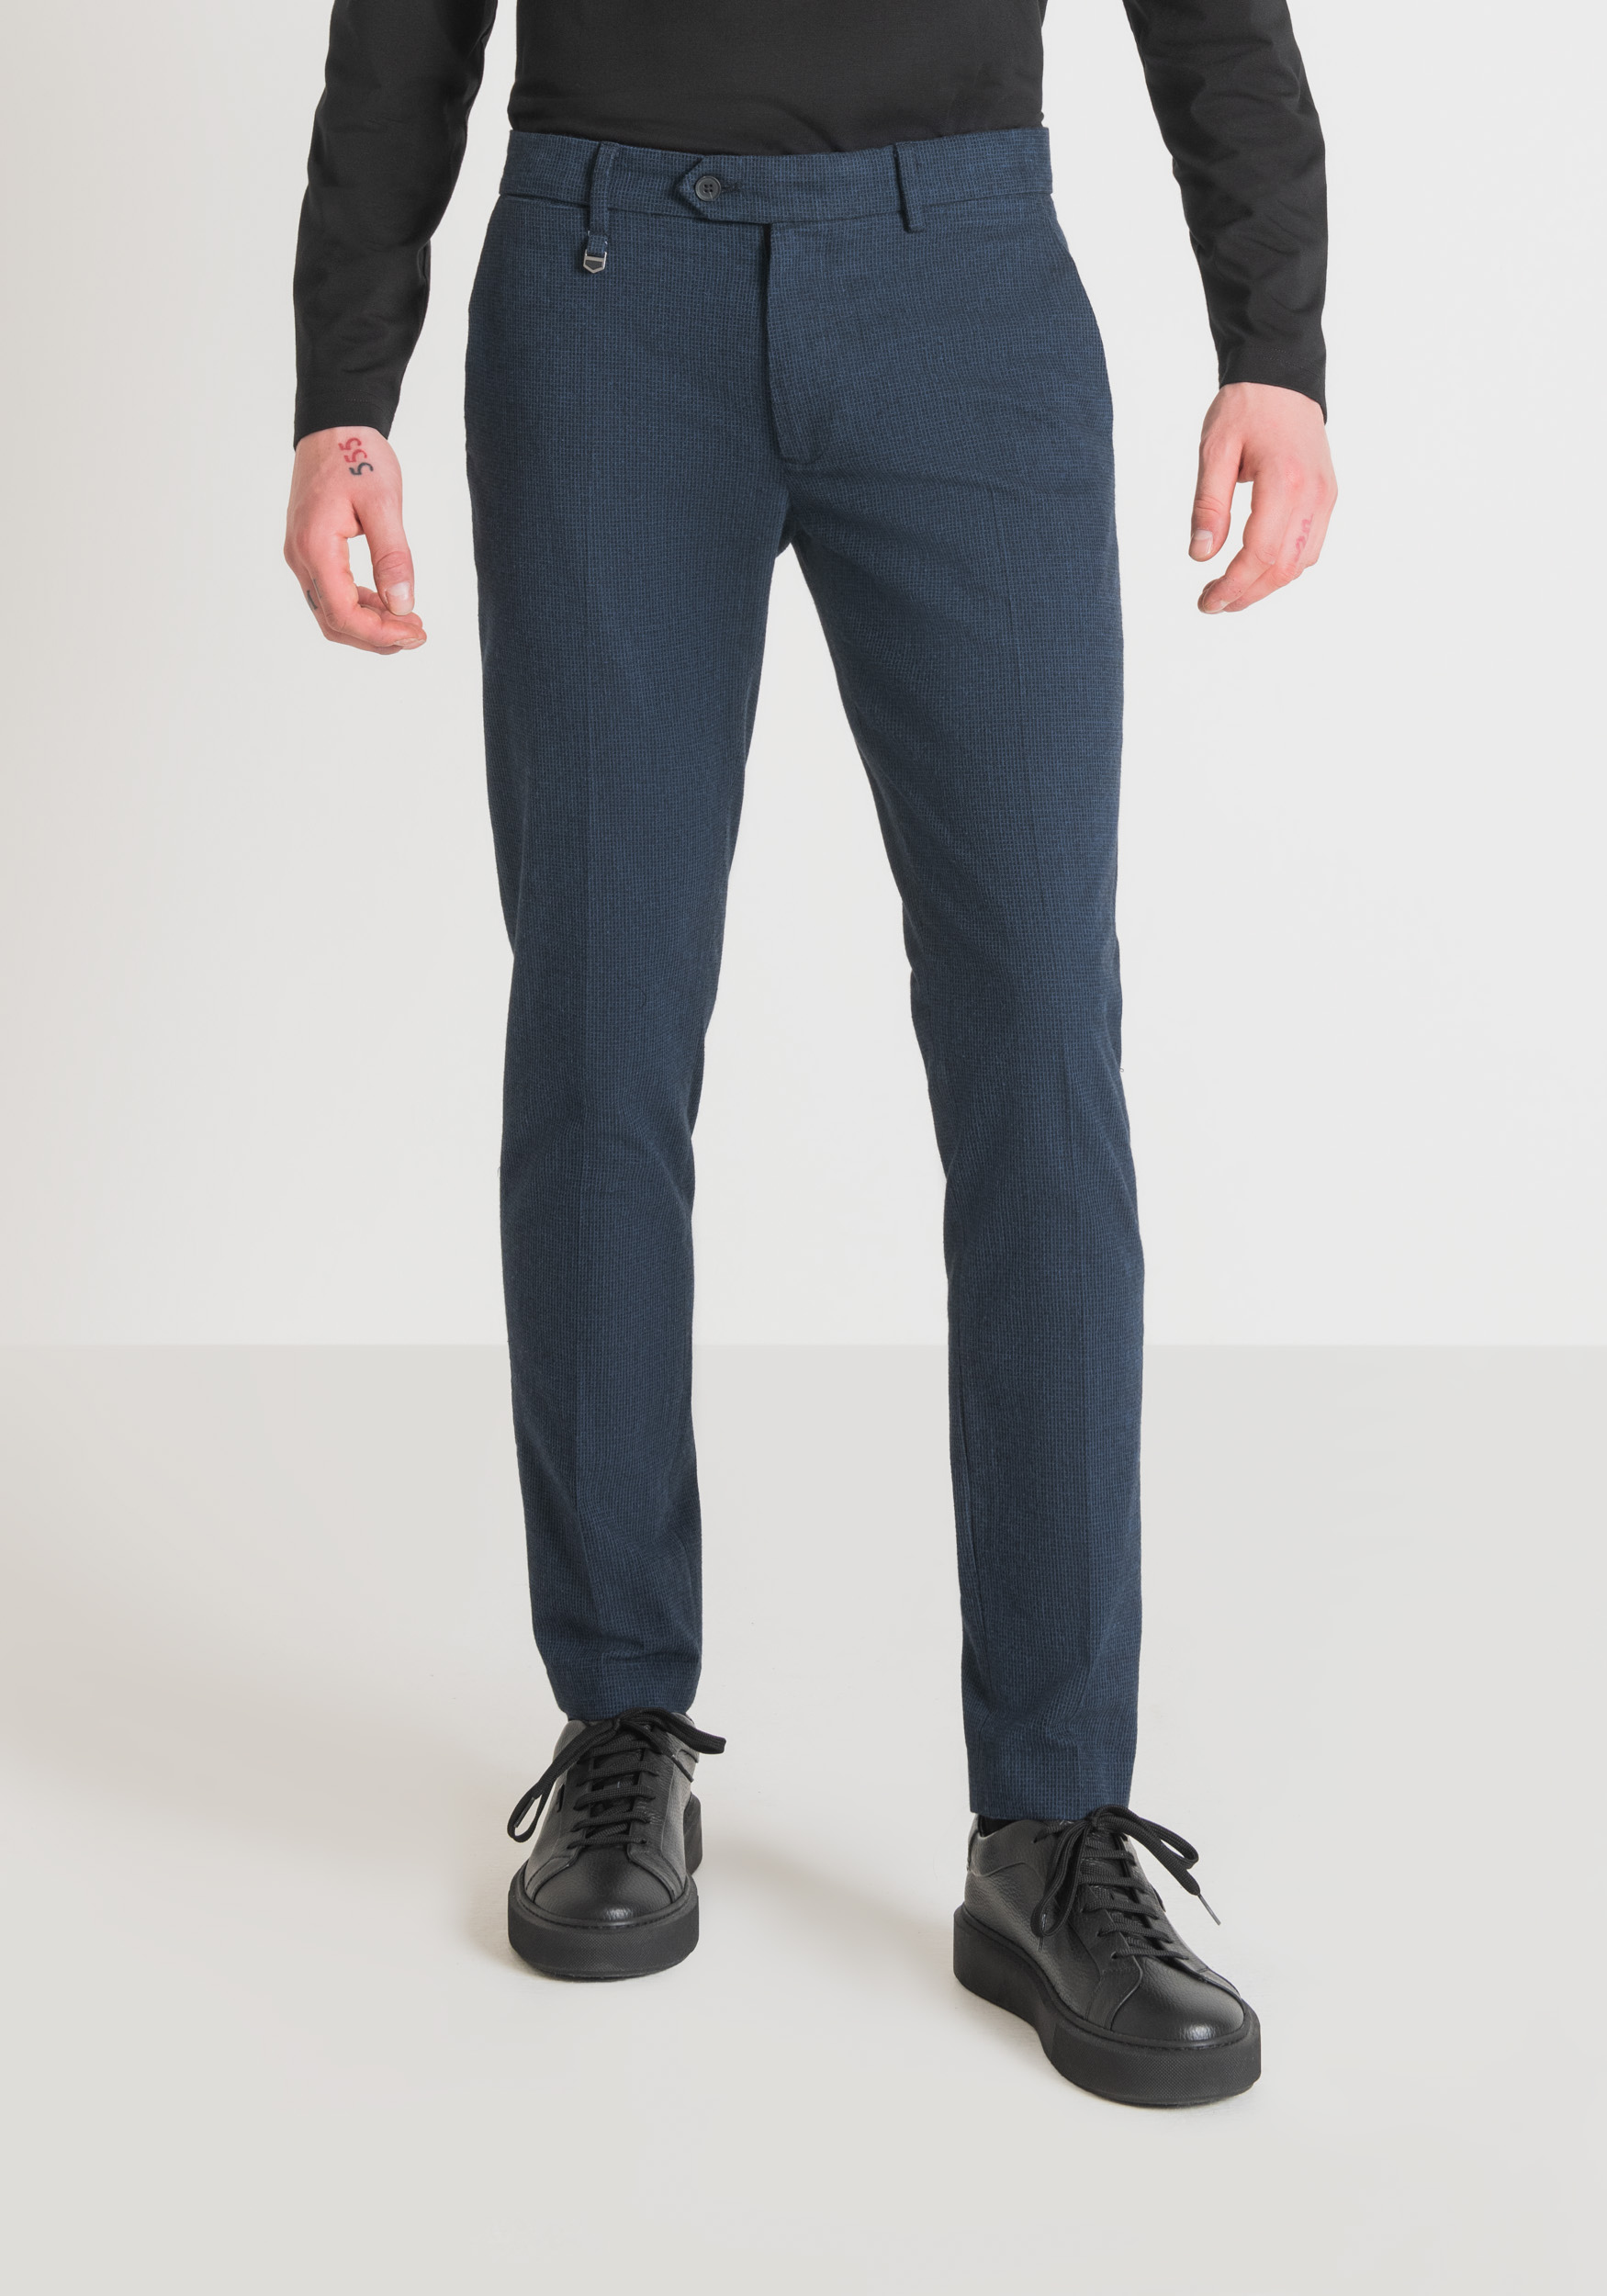 Antony Morato Pantalon Skinny Fit Bryan En Coton Melange Armure Elastique Encre Bleu | Homme Pantalons